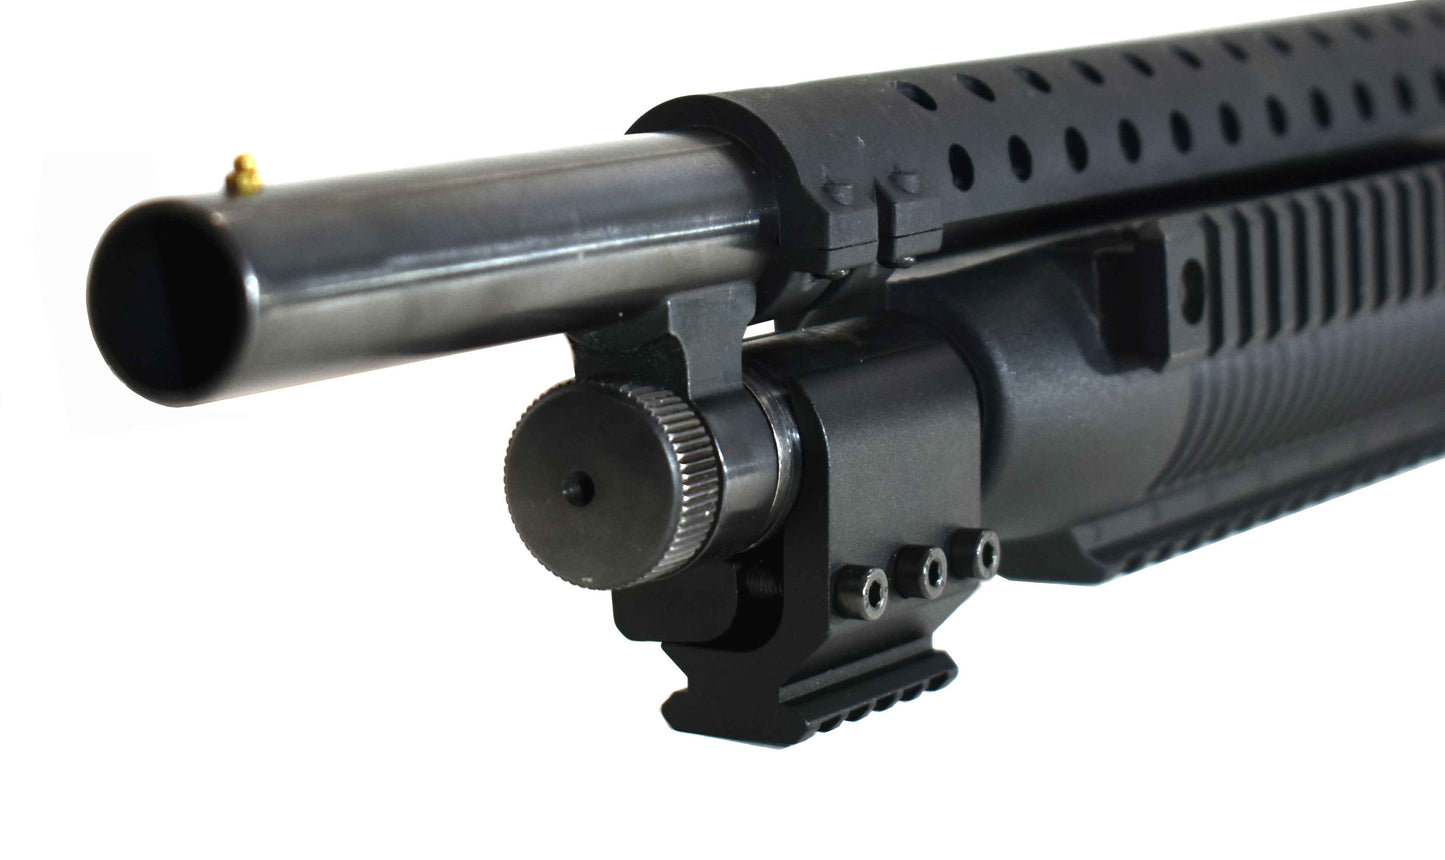 Mossberg 590 20 gauge pump tactical flashlight with mount aluminum black hunting light.